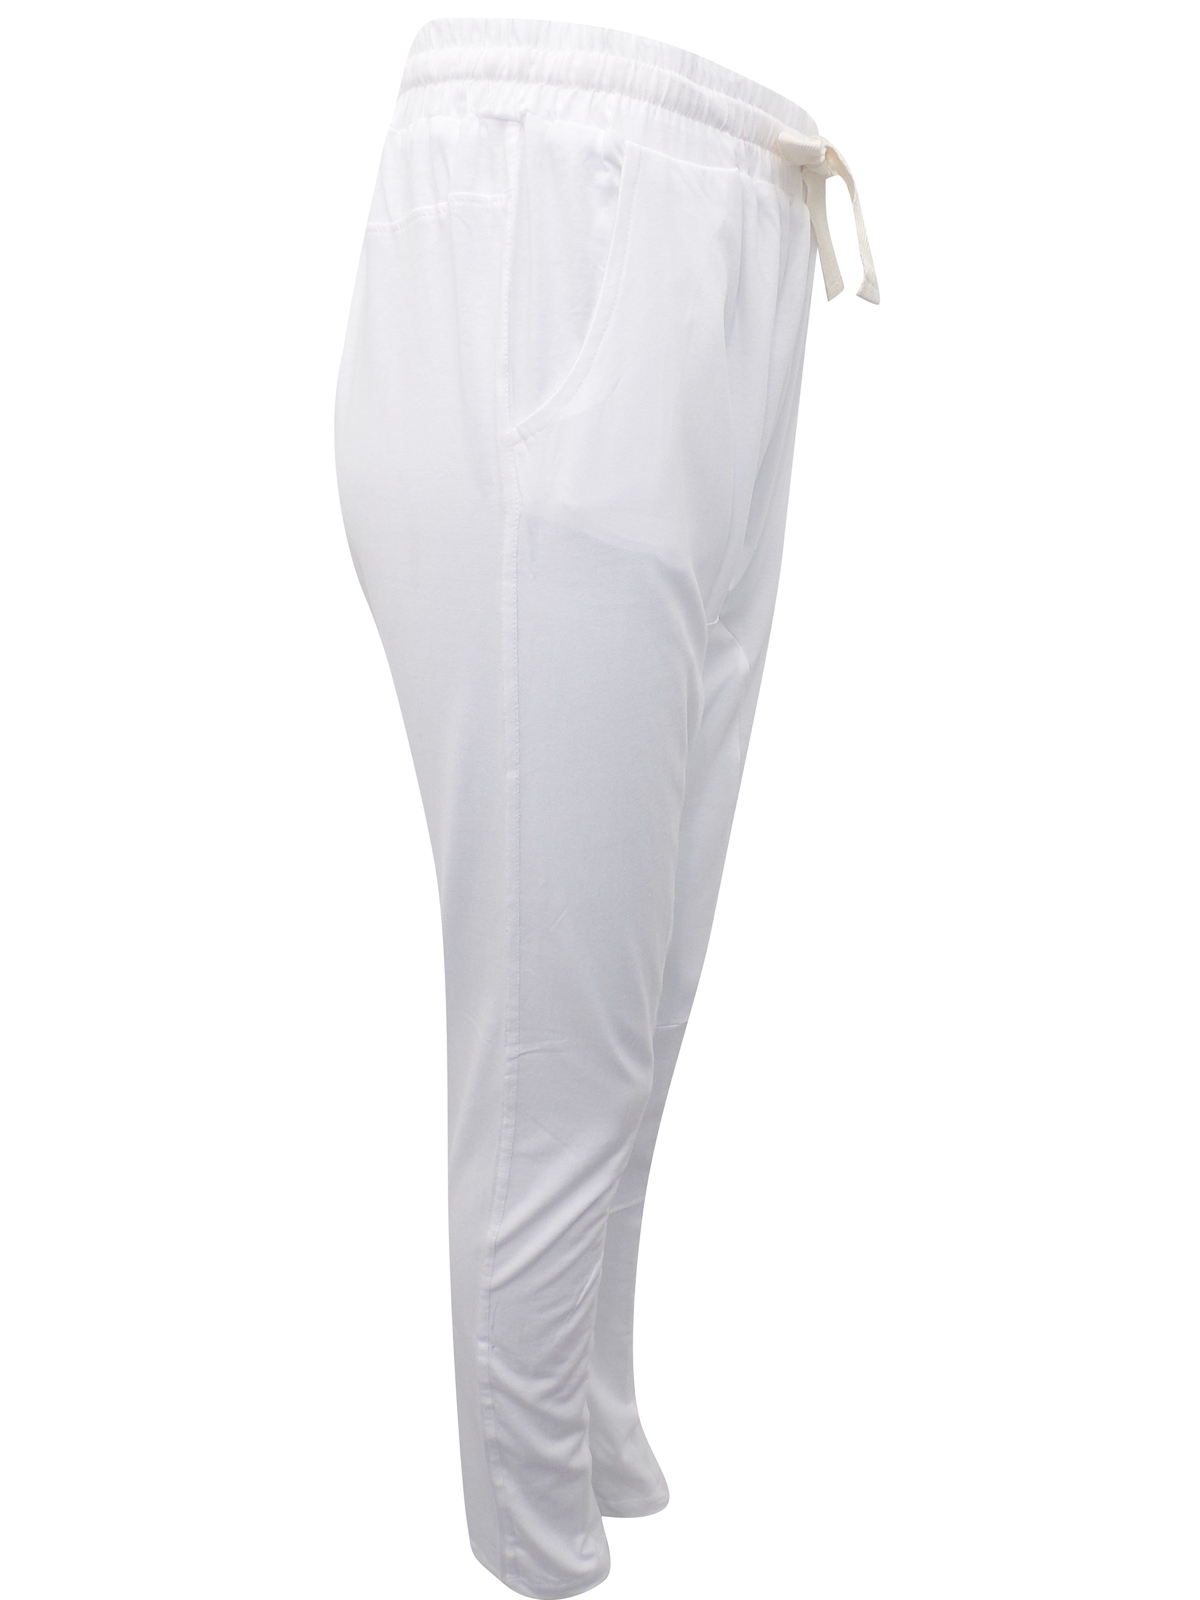 Cloth & Co - - Cloth&Co WHITE Organic Cotton Lounge Pants - Size 10 to